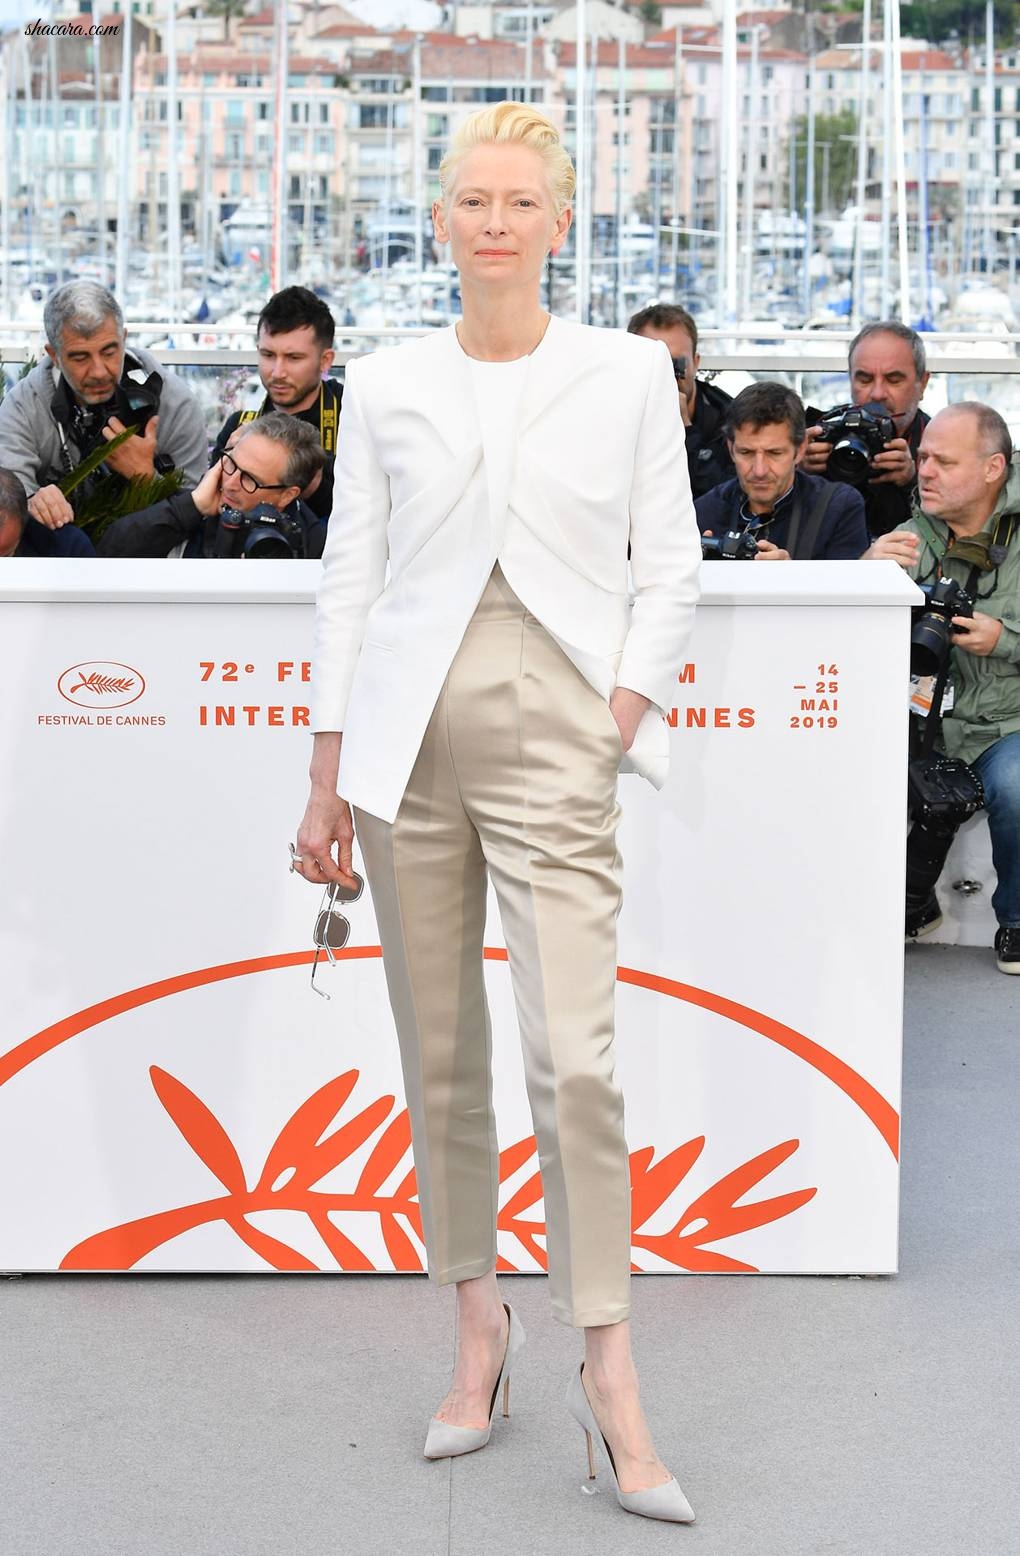 Cannes Film Festival Red Carpet 2019